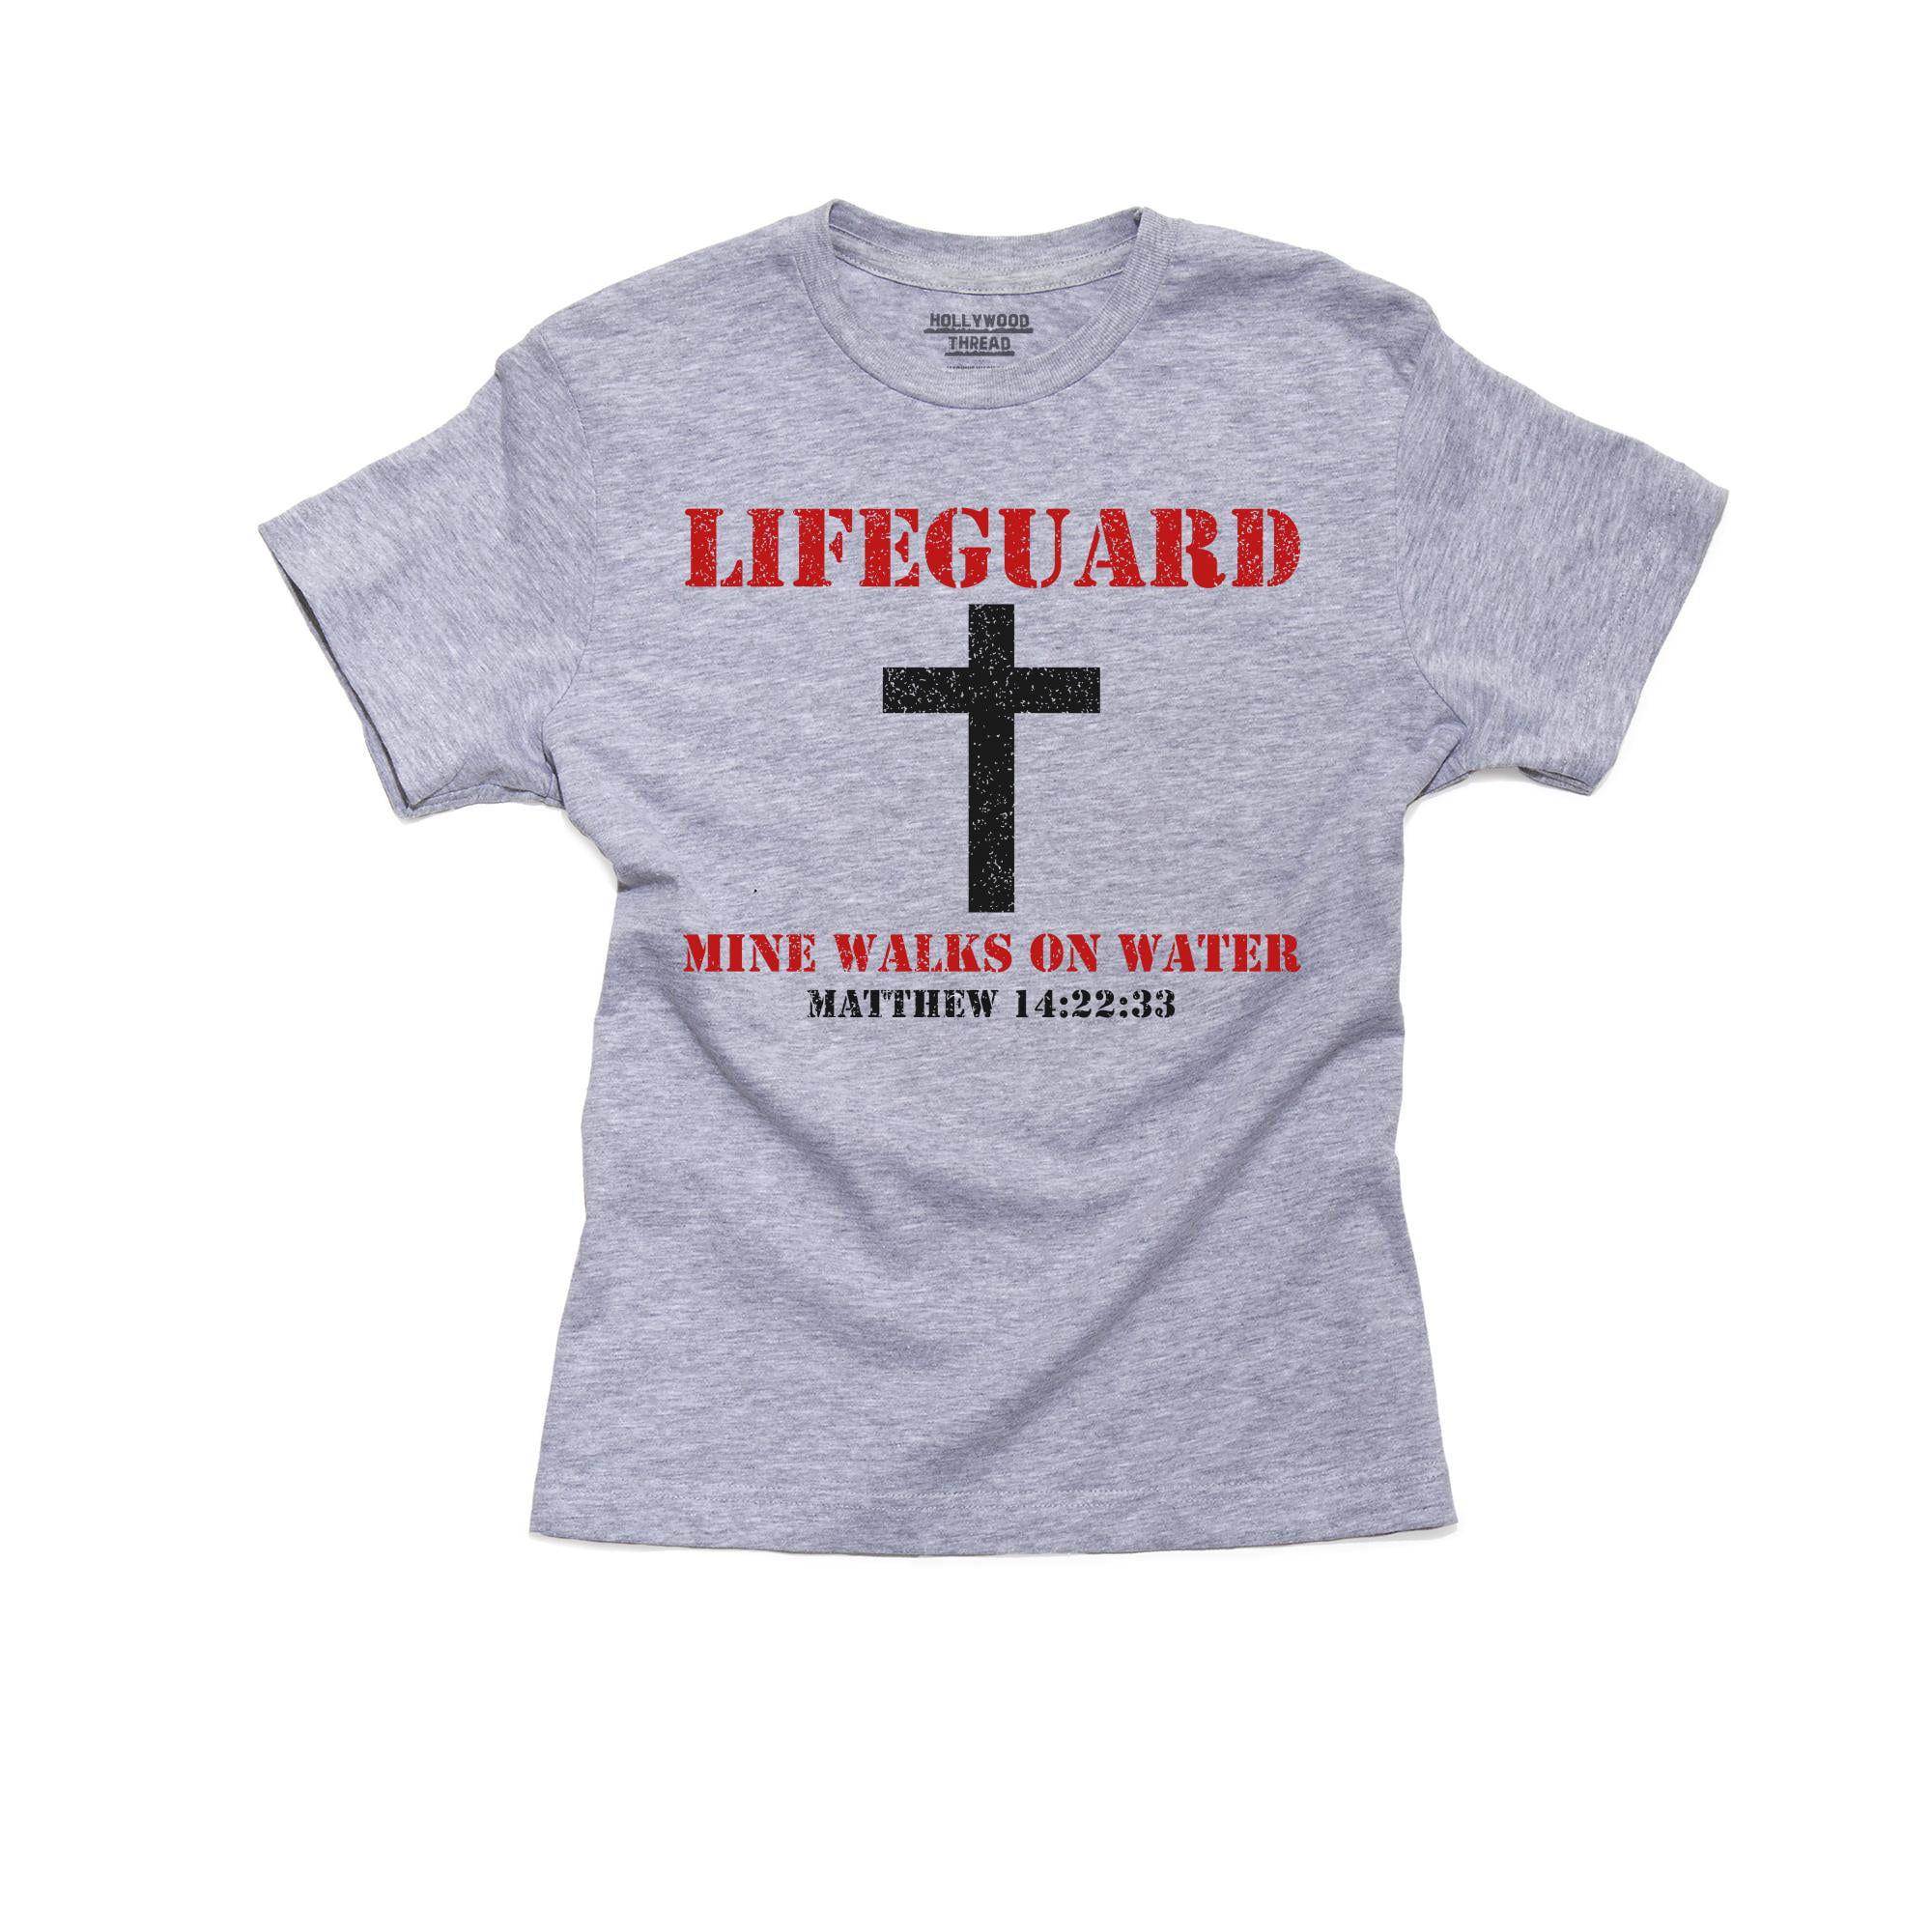 My Lifegaurd Walks On Water Funny Womens Ladies T-Shirt